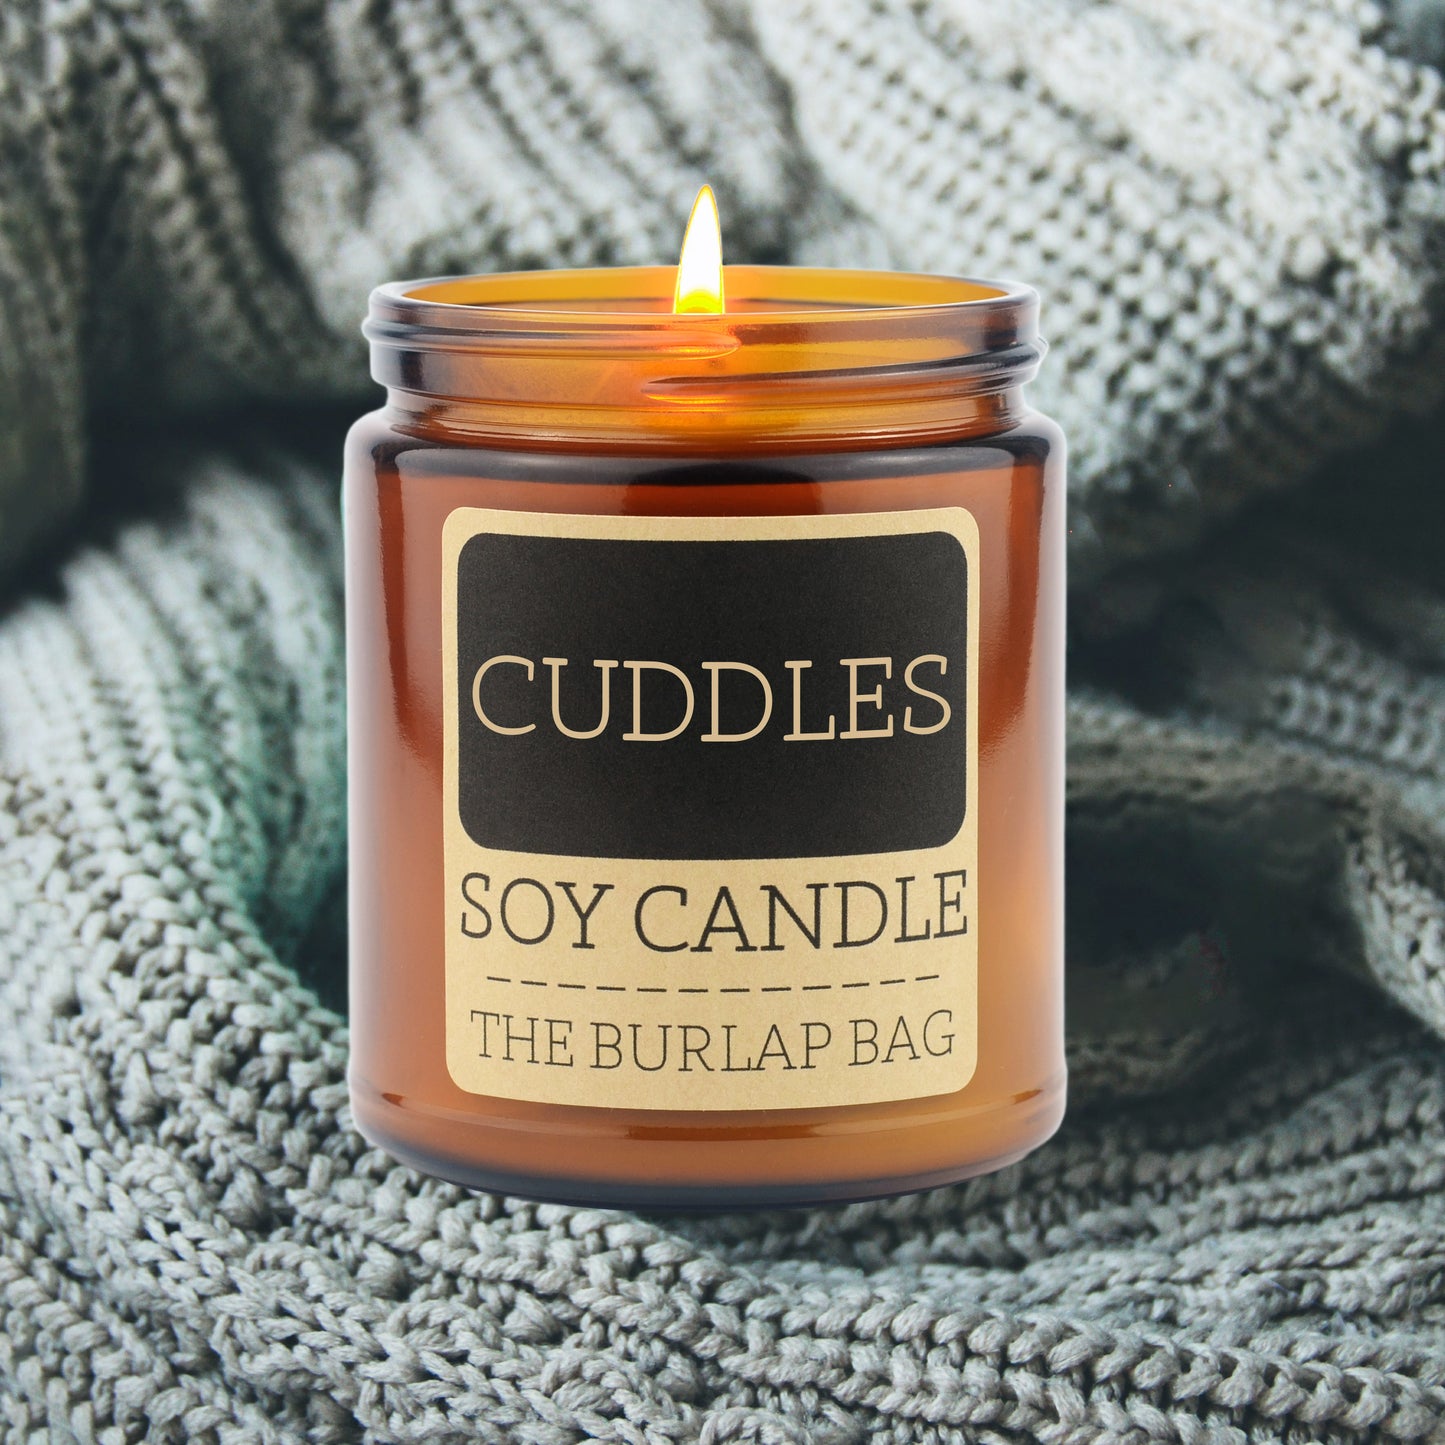 Cuddles - Soy Candle 9oz